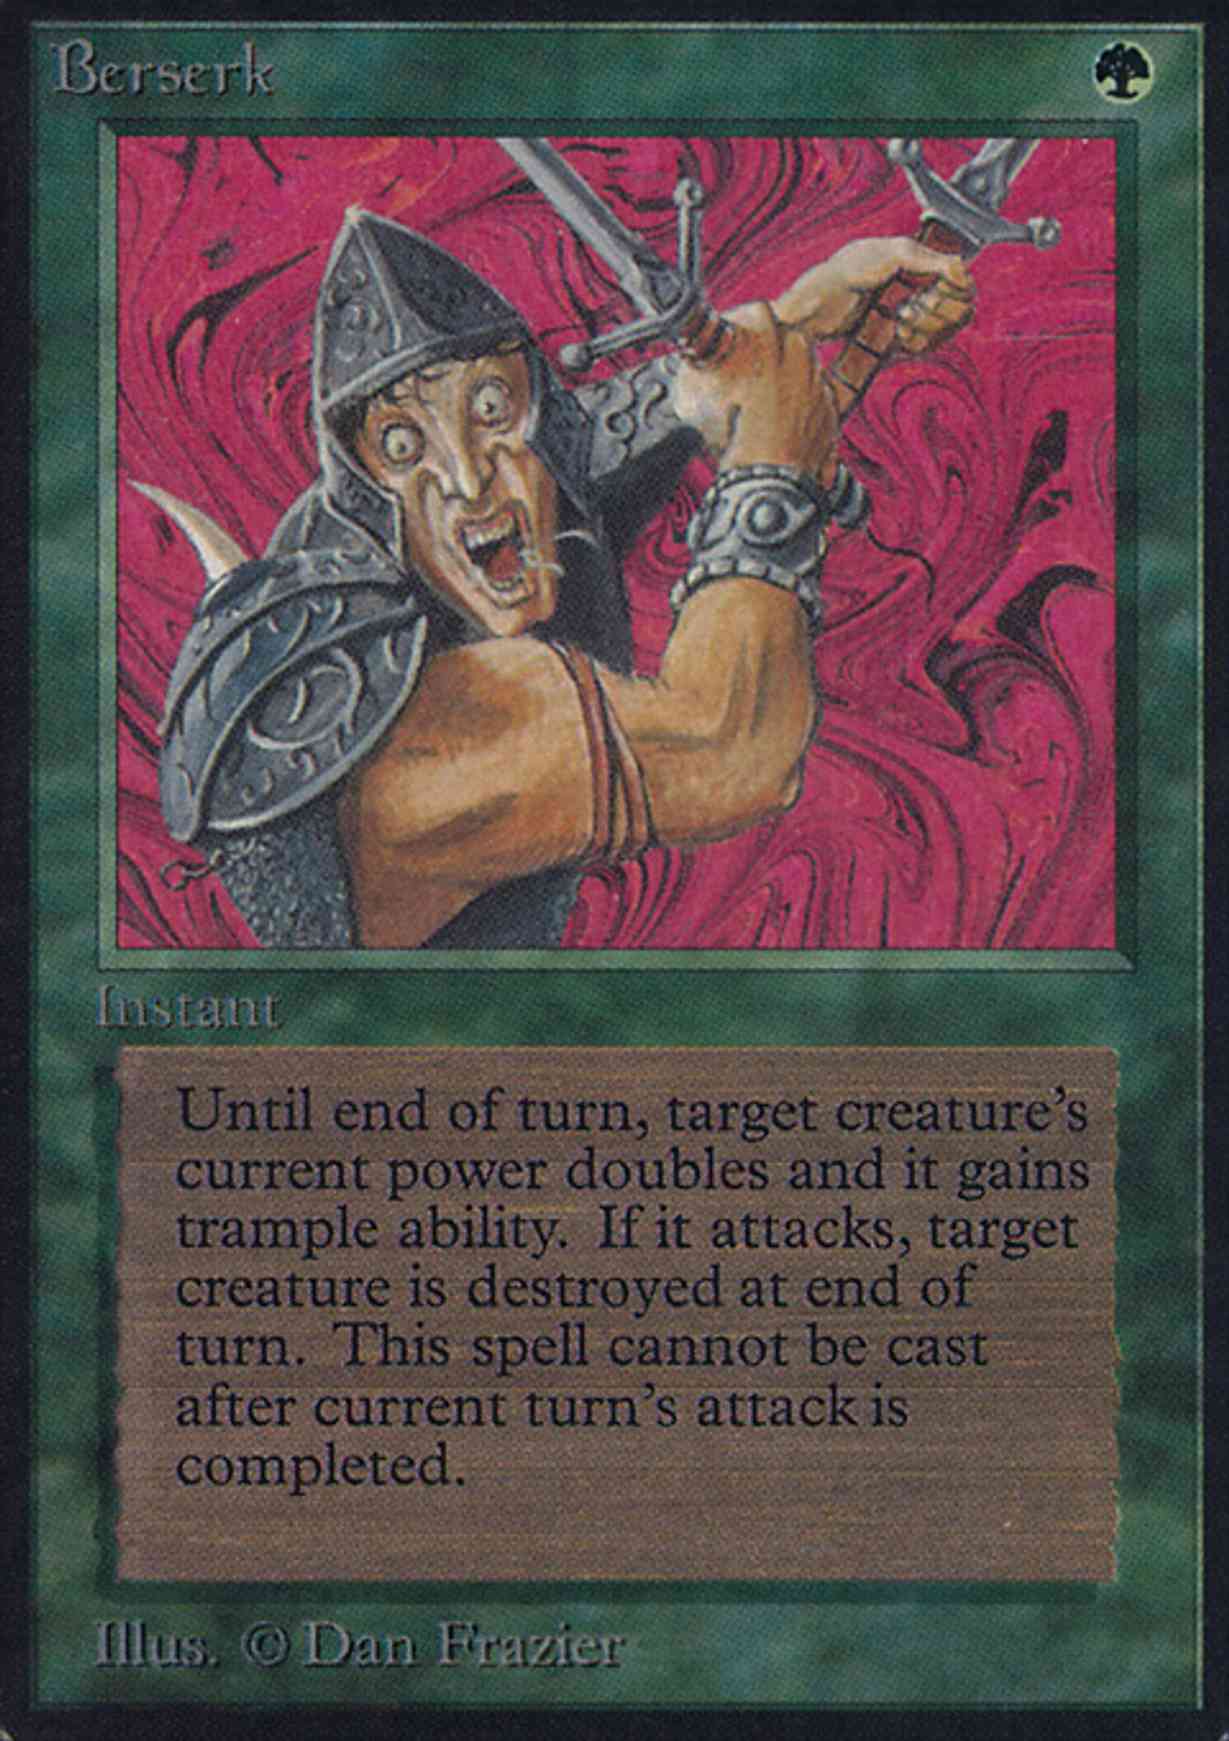 Berserk magic card front